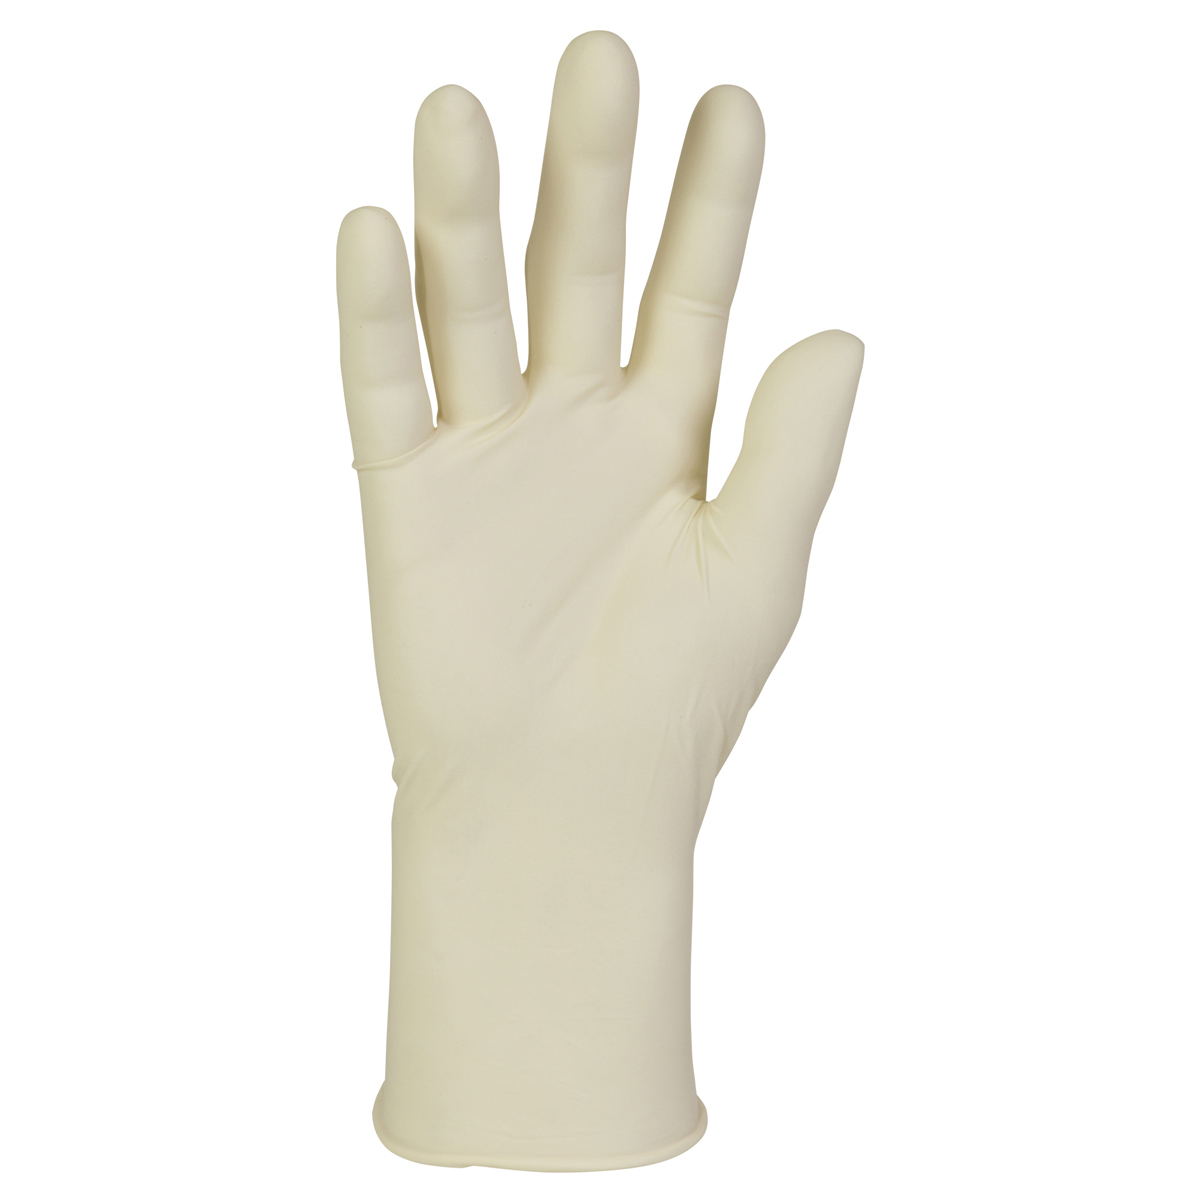 Kimberly-Clark Professional* X-Small Natural 6.7 mil PFE Latex Powder-Free Disposable Exam Gloves (100 Gloves Per Box) (Availabi